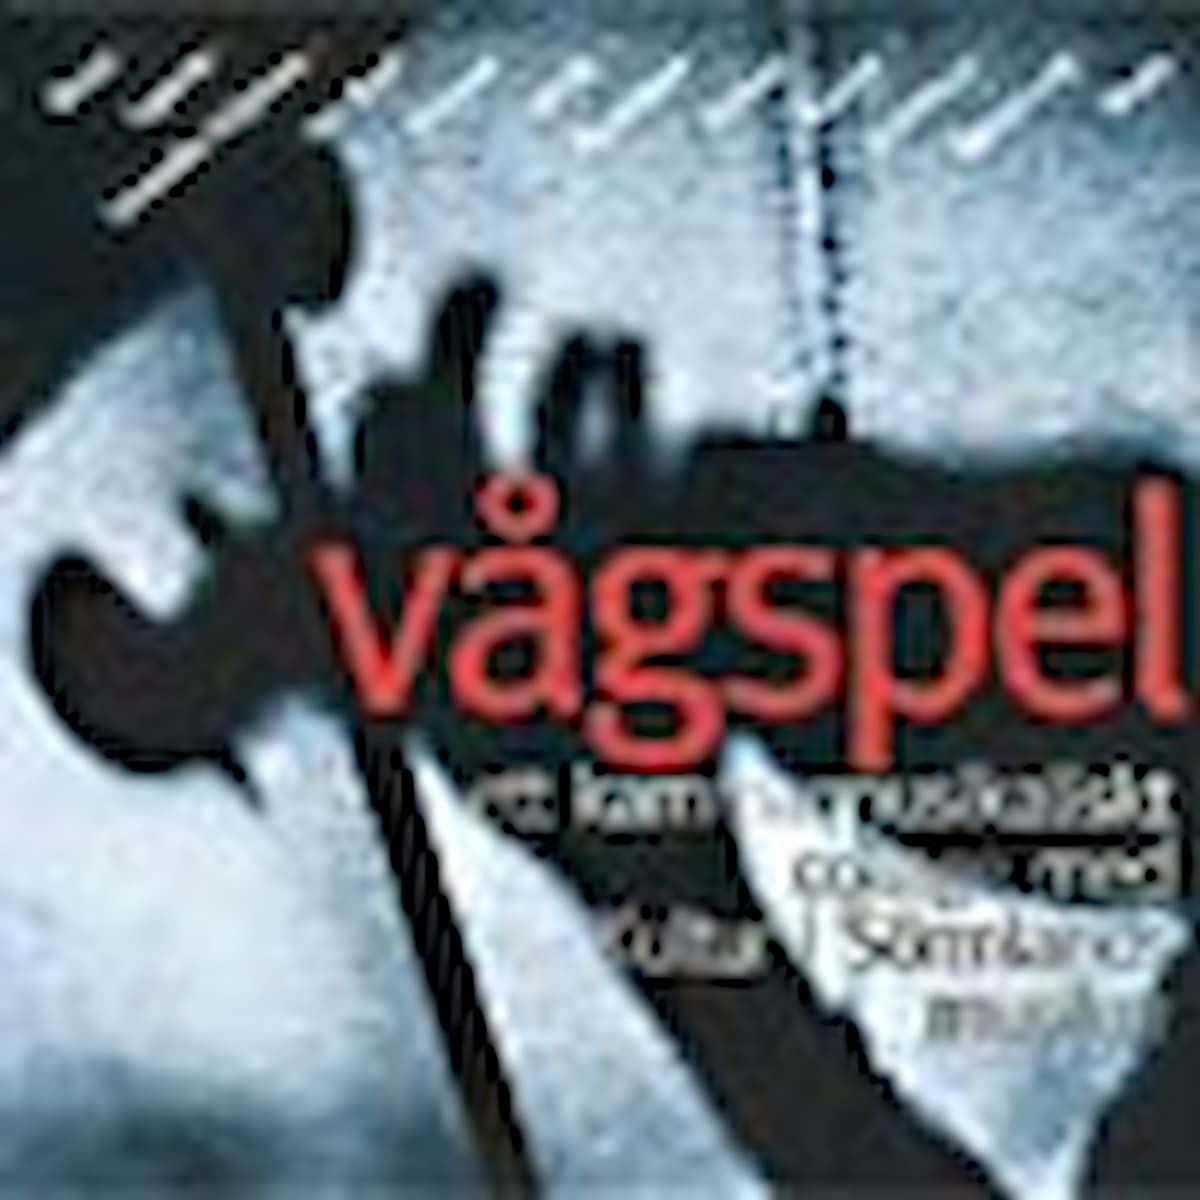 Record cover artwork for Vågspel